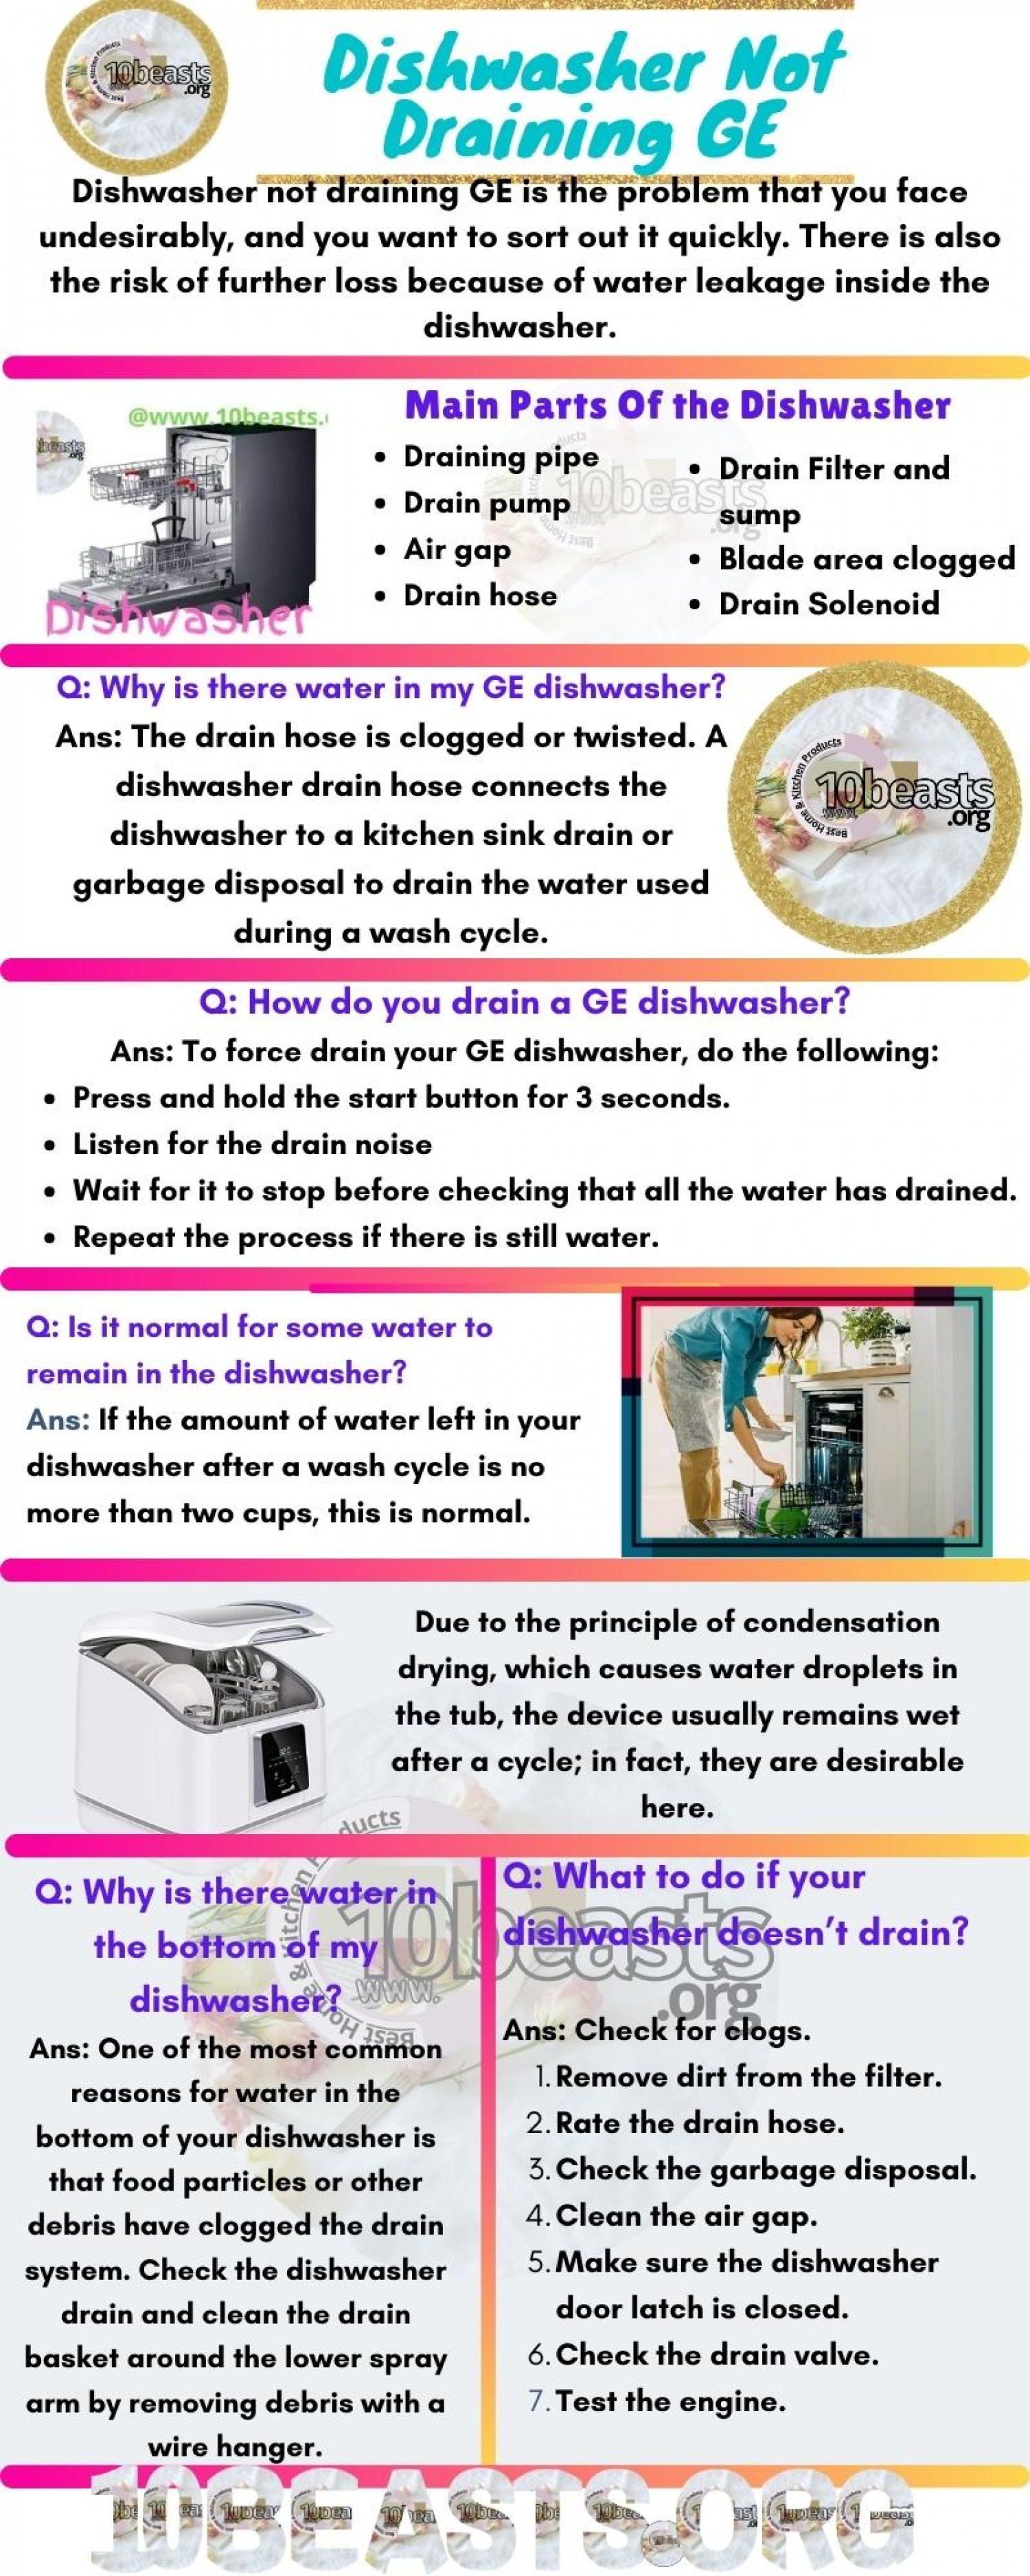 Dishwasher Not Draining GE Infographic